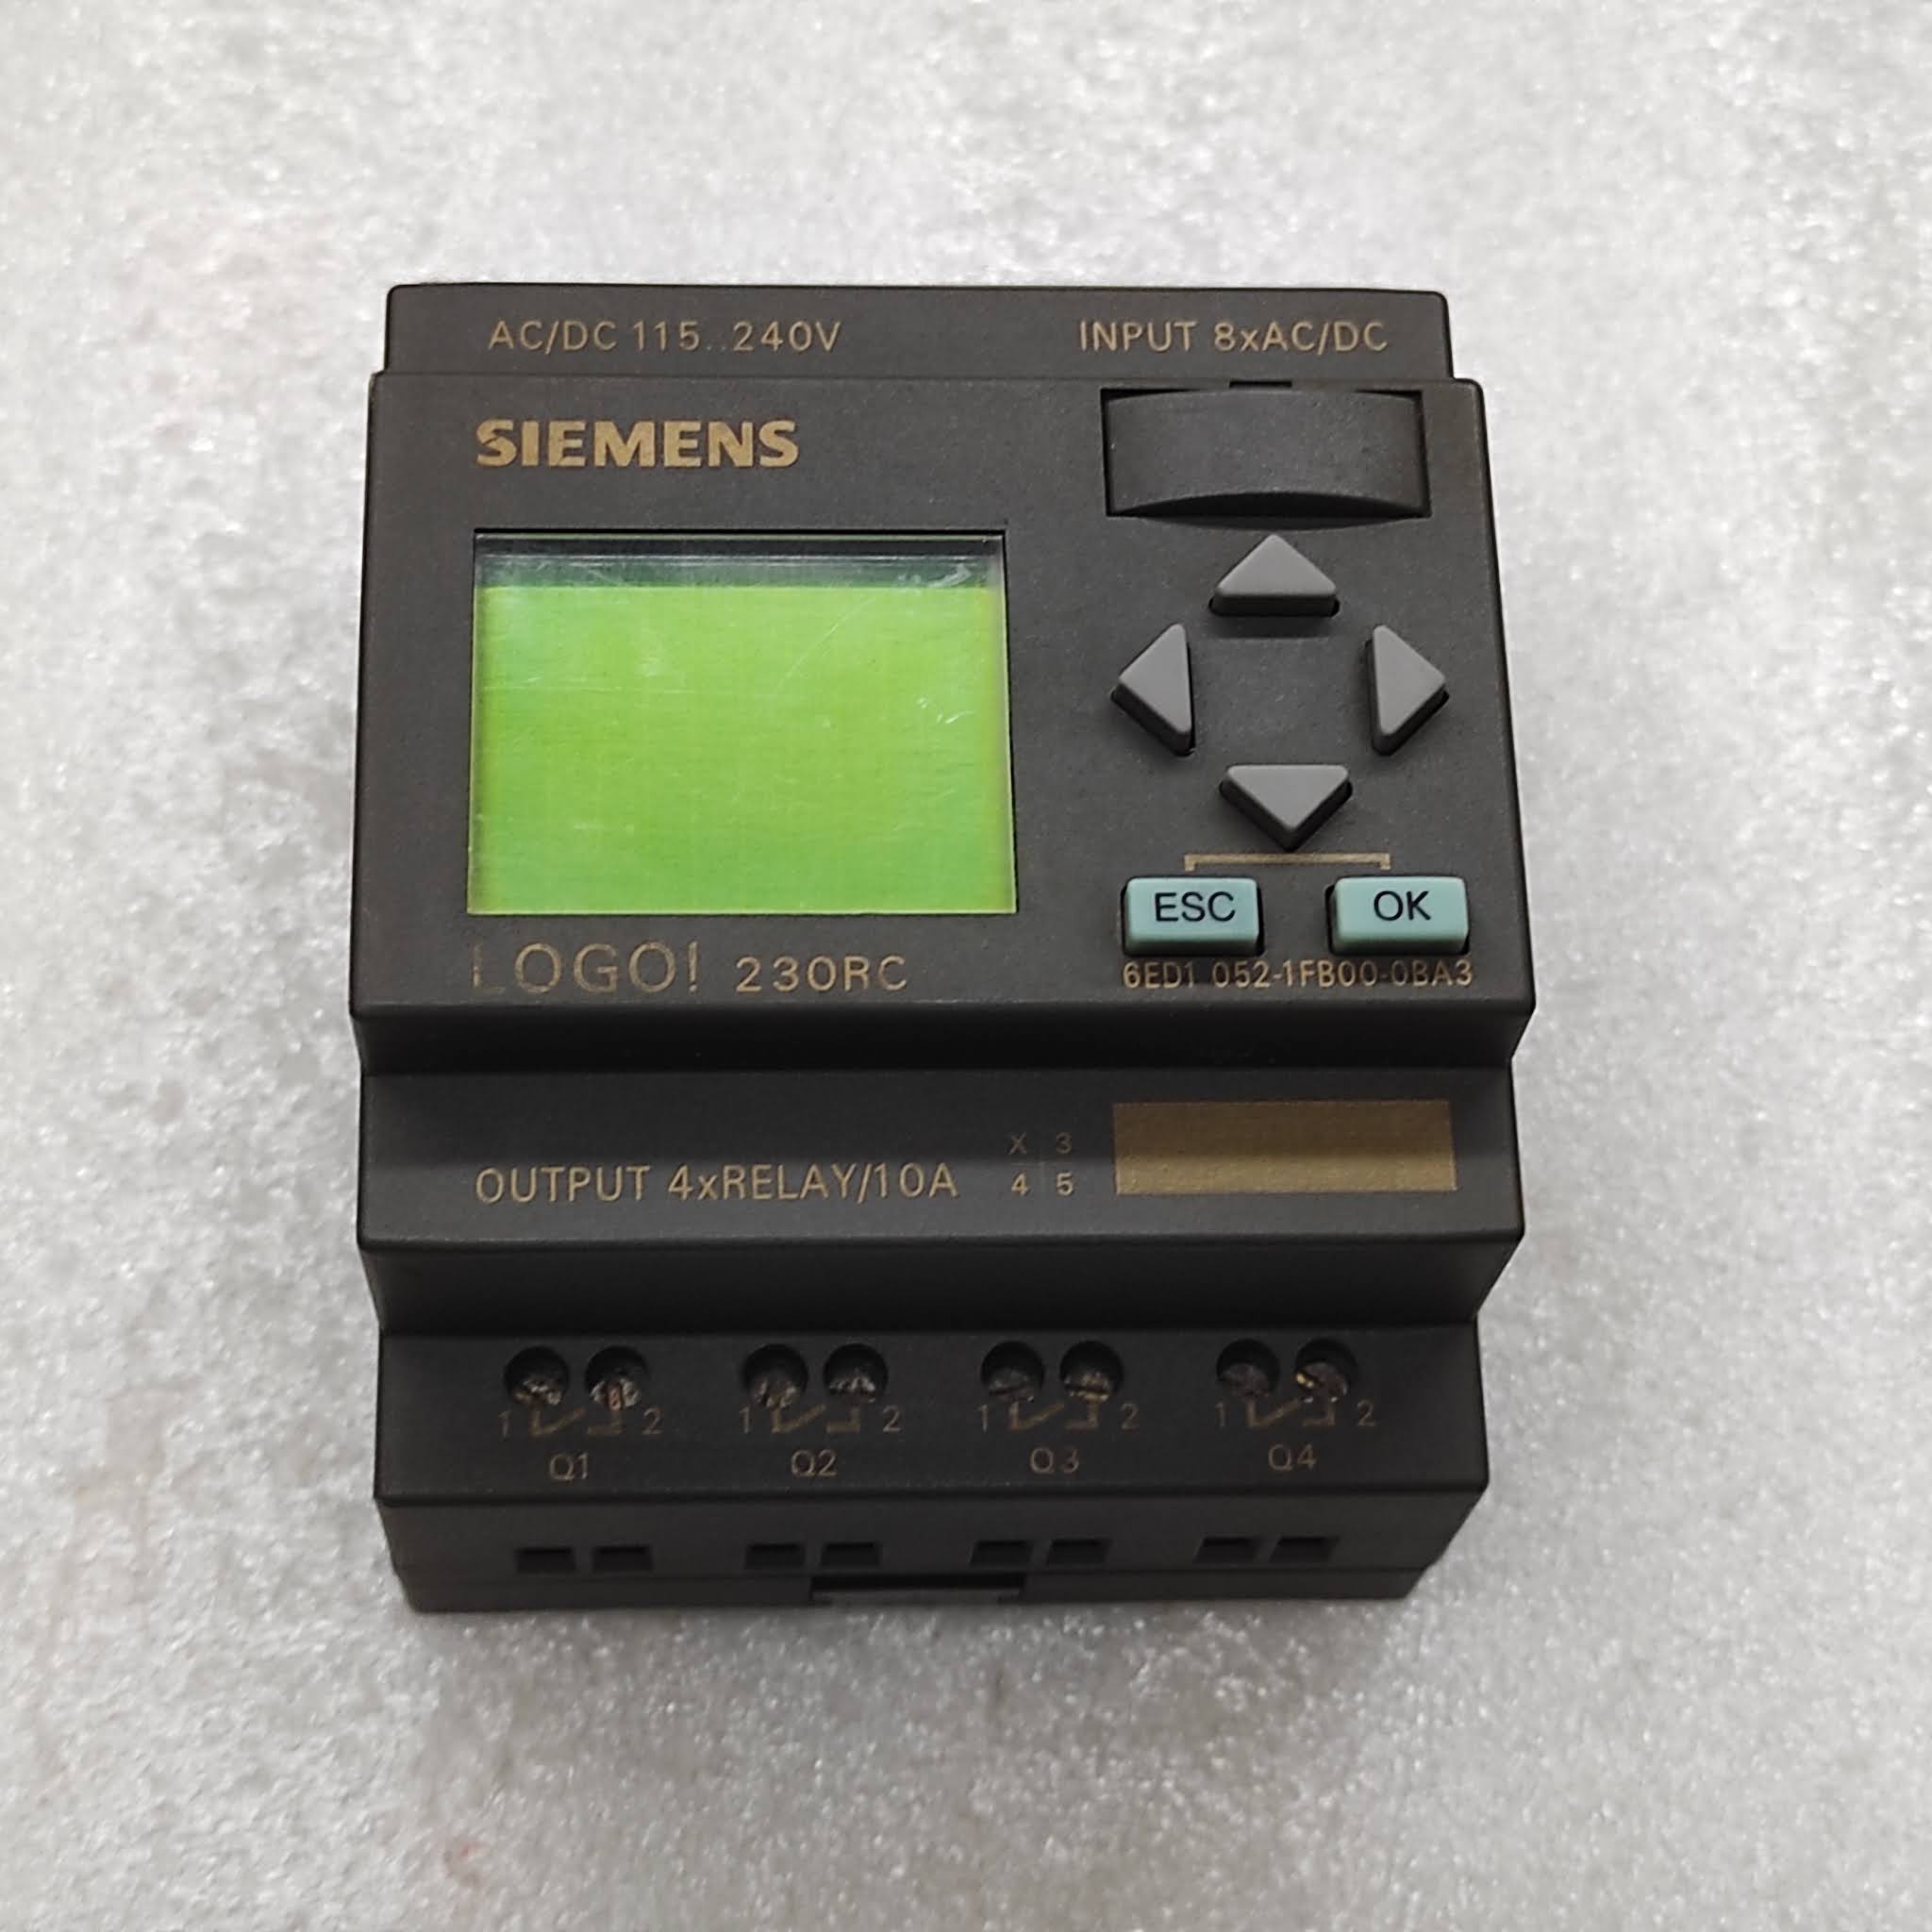 ONE Siemens SIEMENS 6ED1 052-1FB00-0BA3 LOGO 230RC